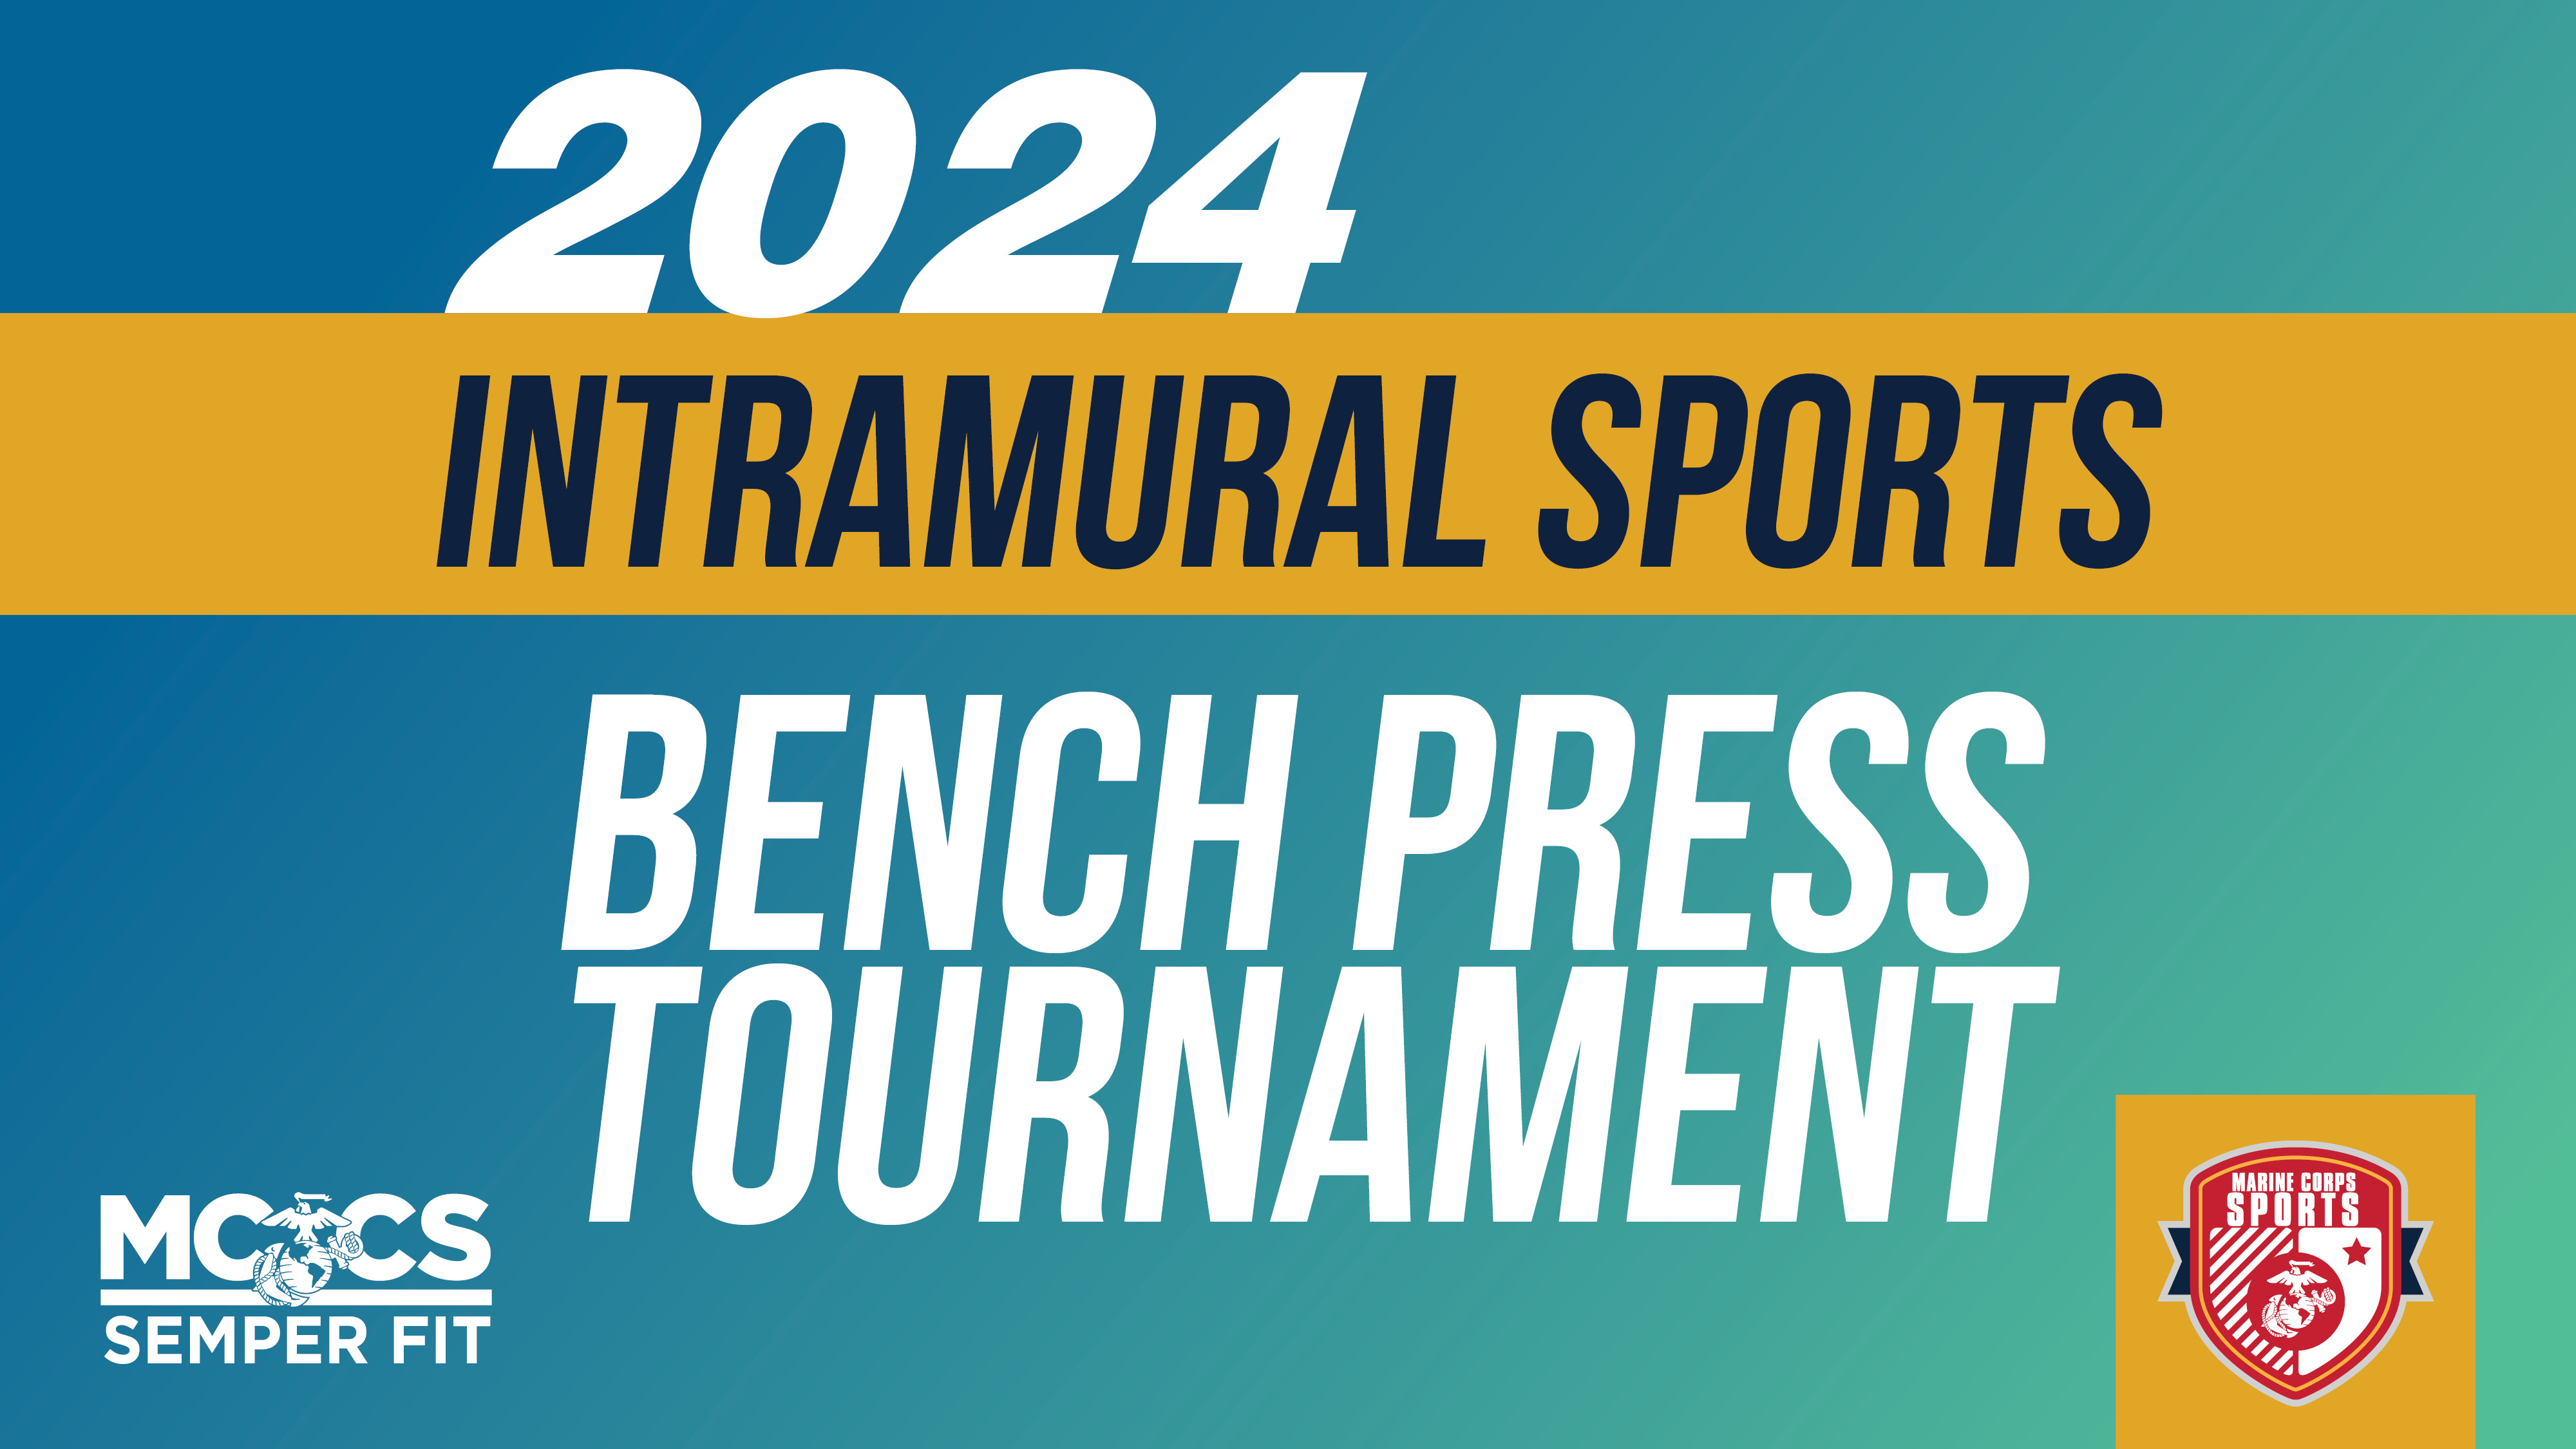 Bench Press Tournament Registration